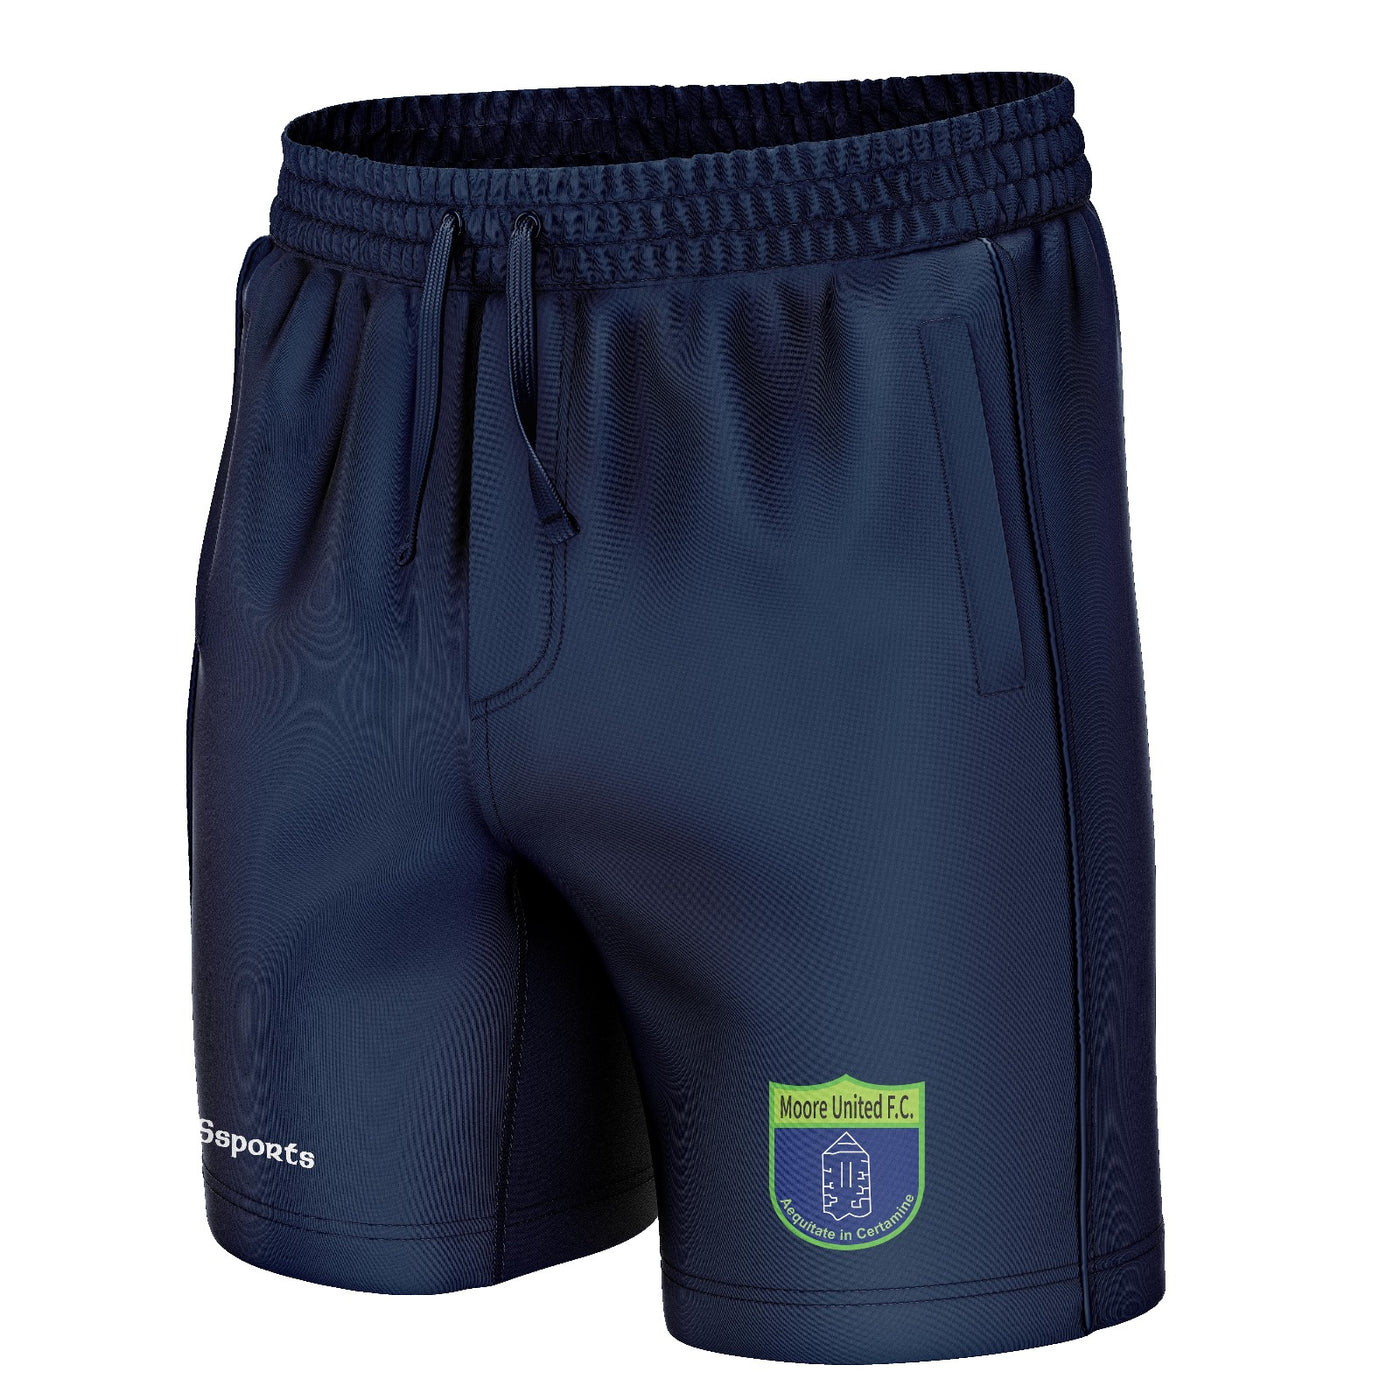 Moore United -Leisure shorts